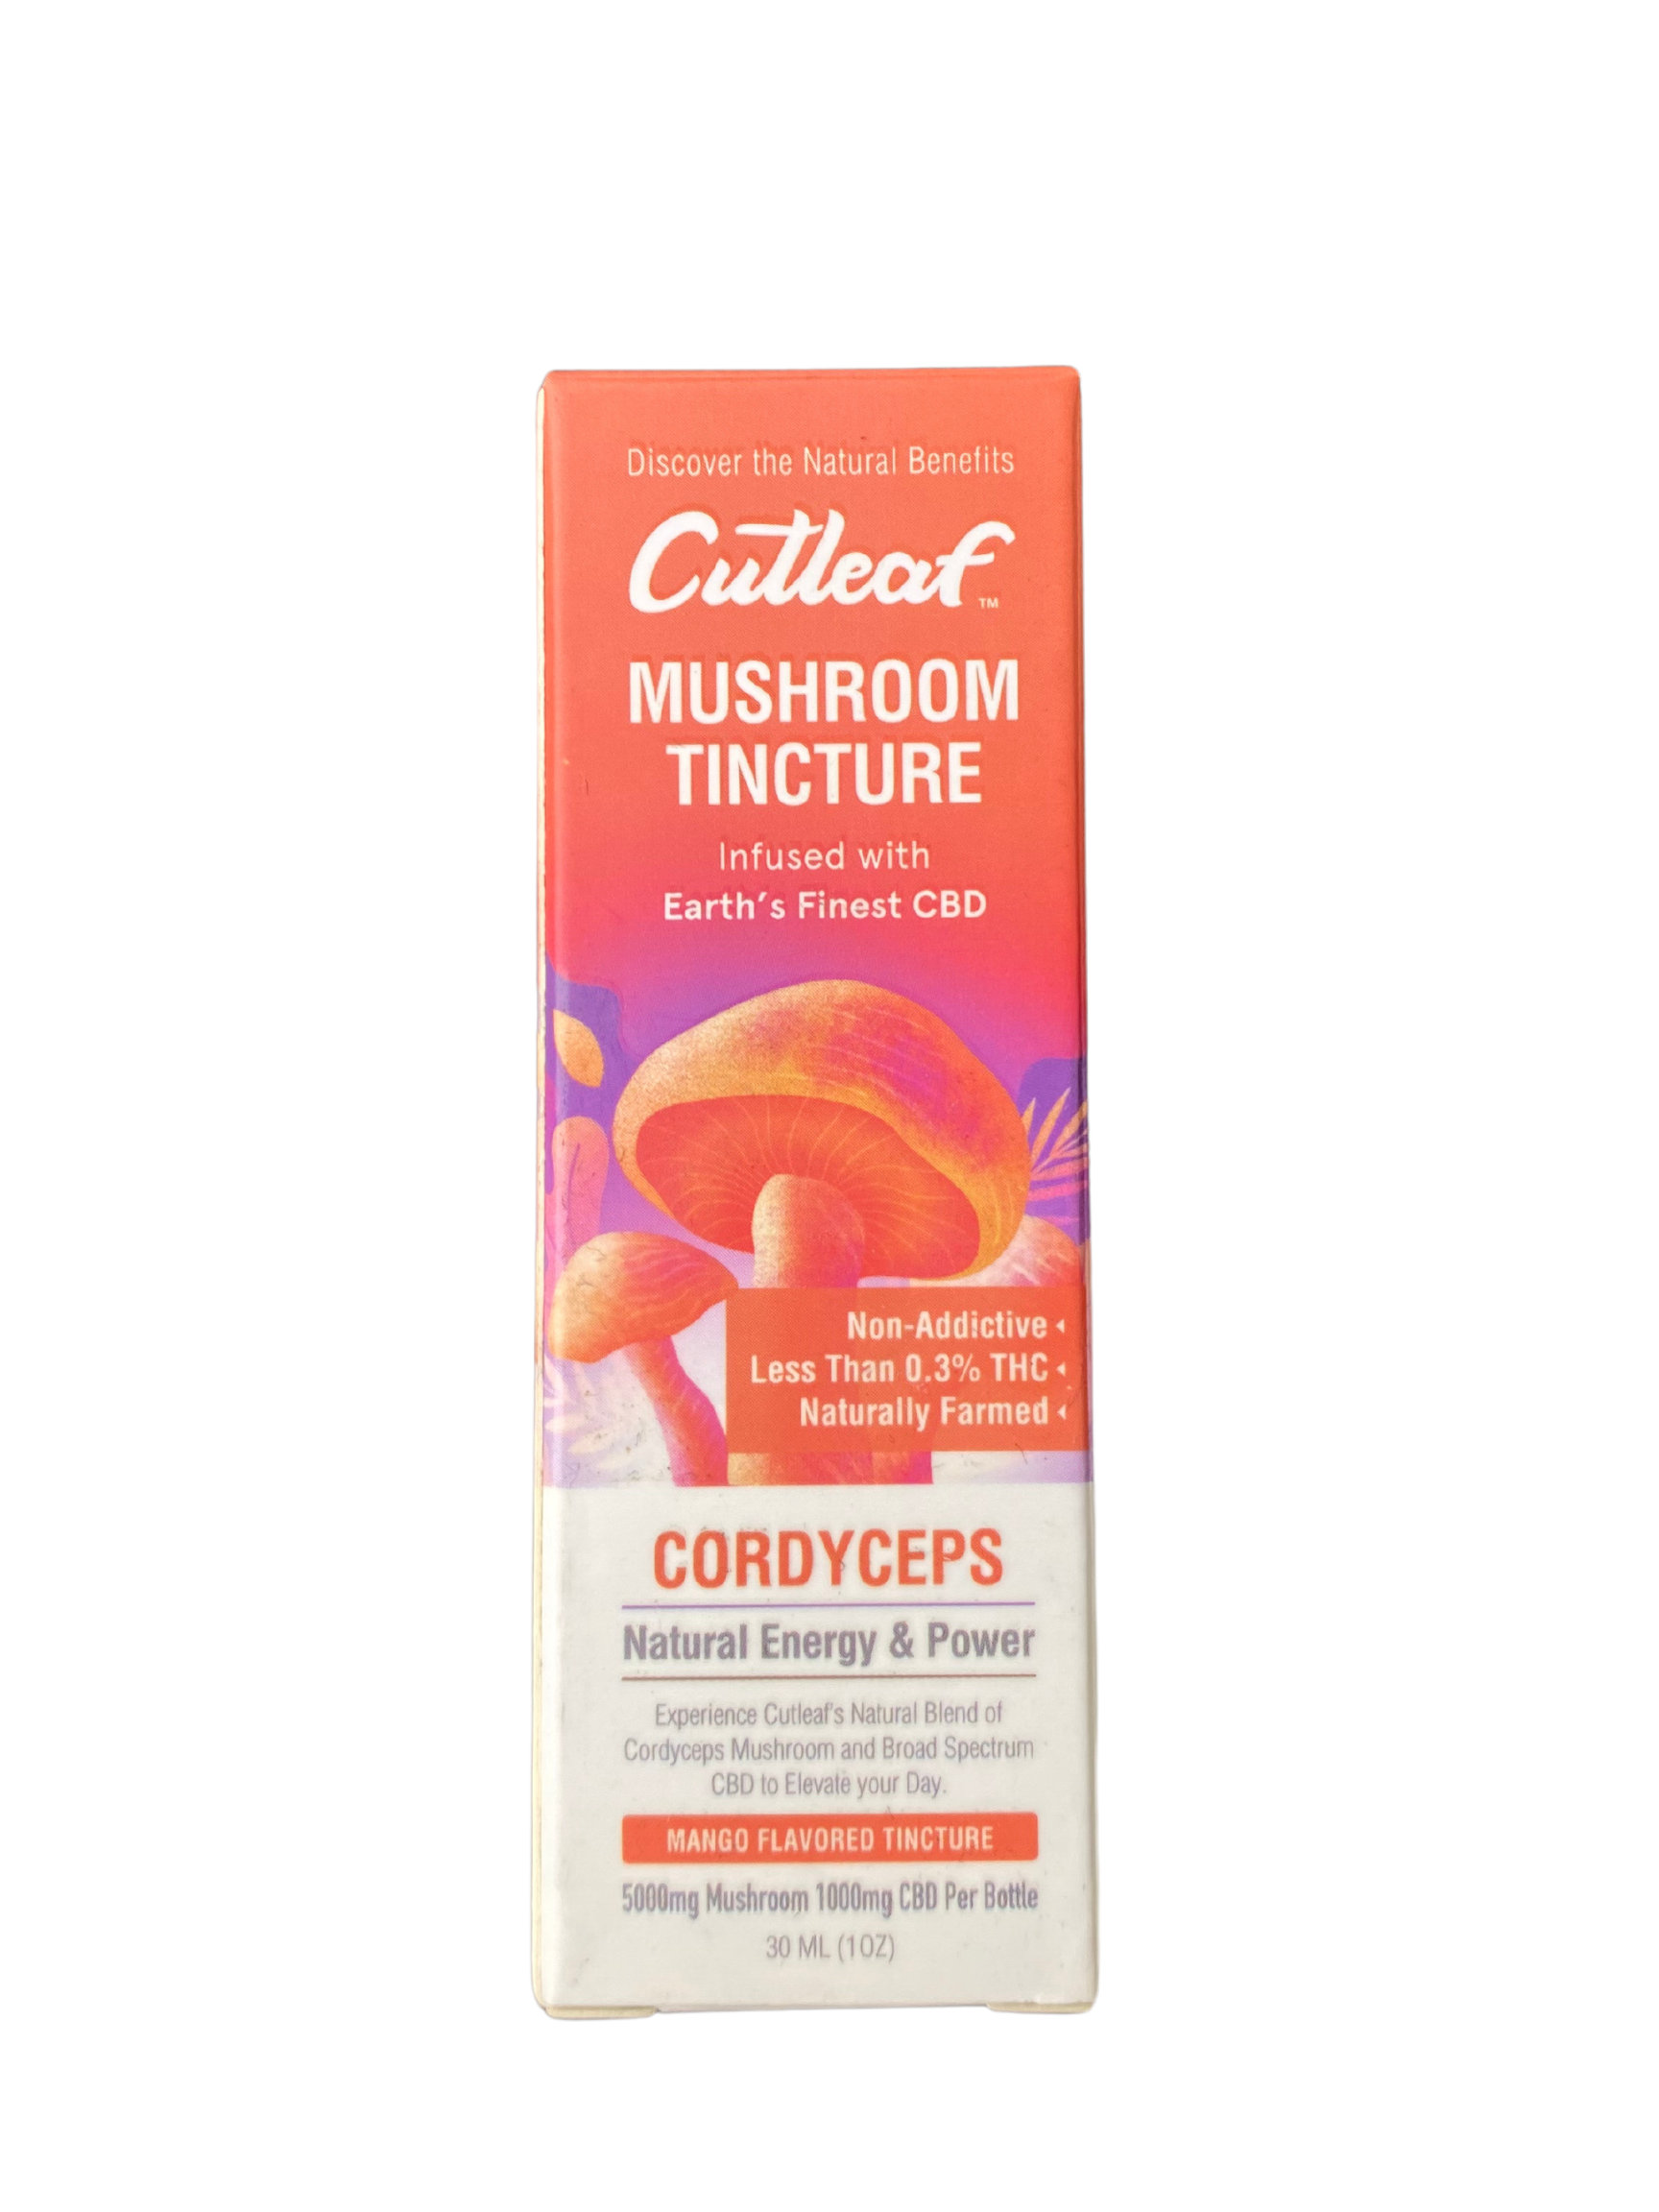 Cutleaf Mushroom Tincture - Cordyceps (Natural Energy & Power)